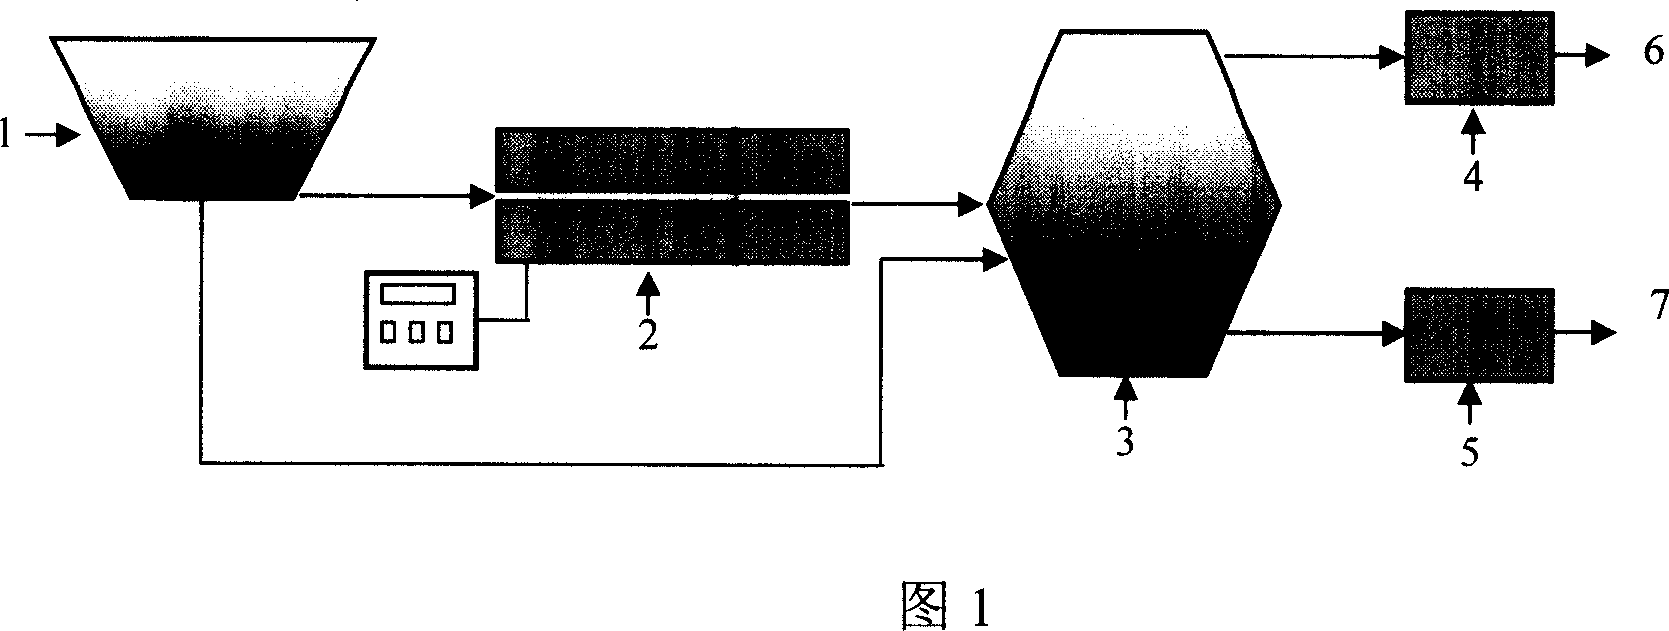 Supersonic wave reinforcement sludge anaerobic digestion gas production method